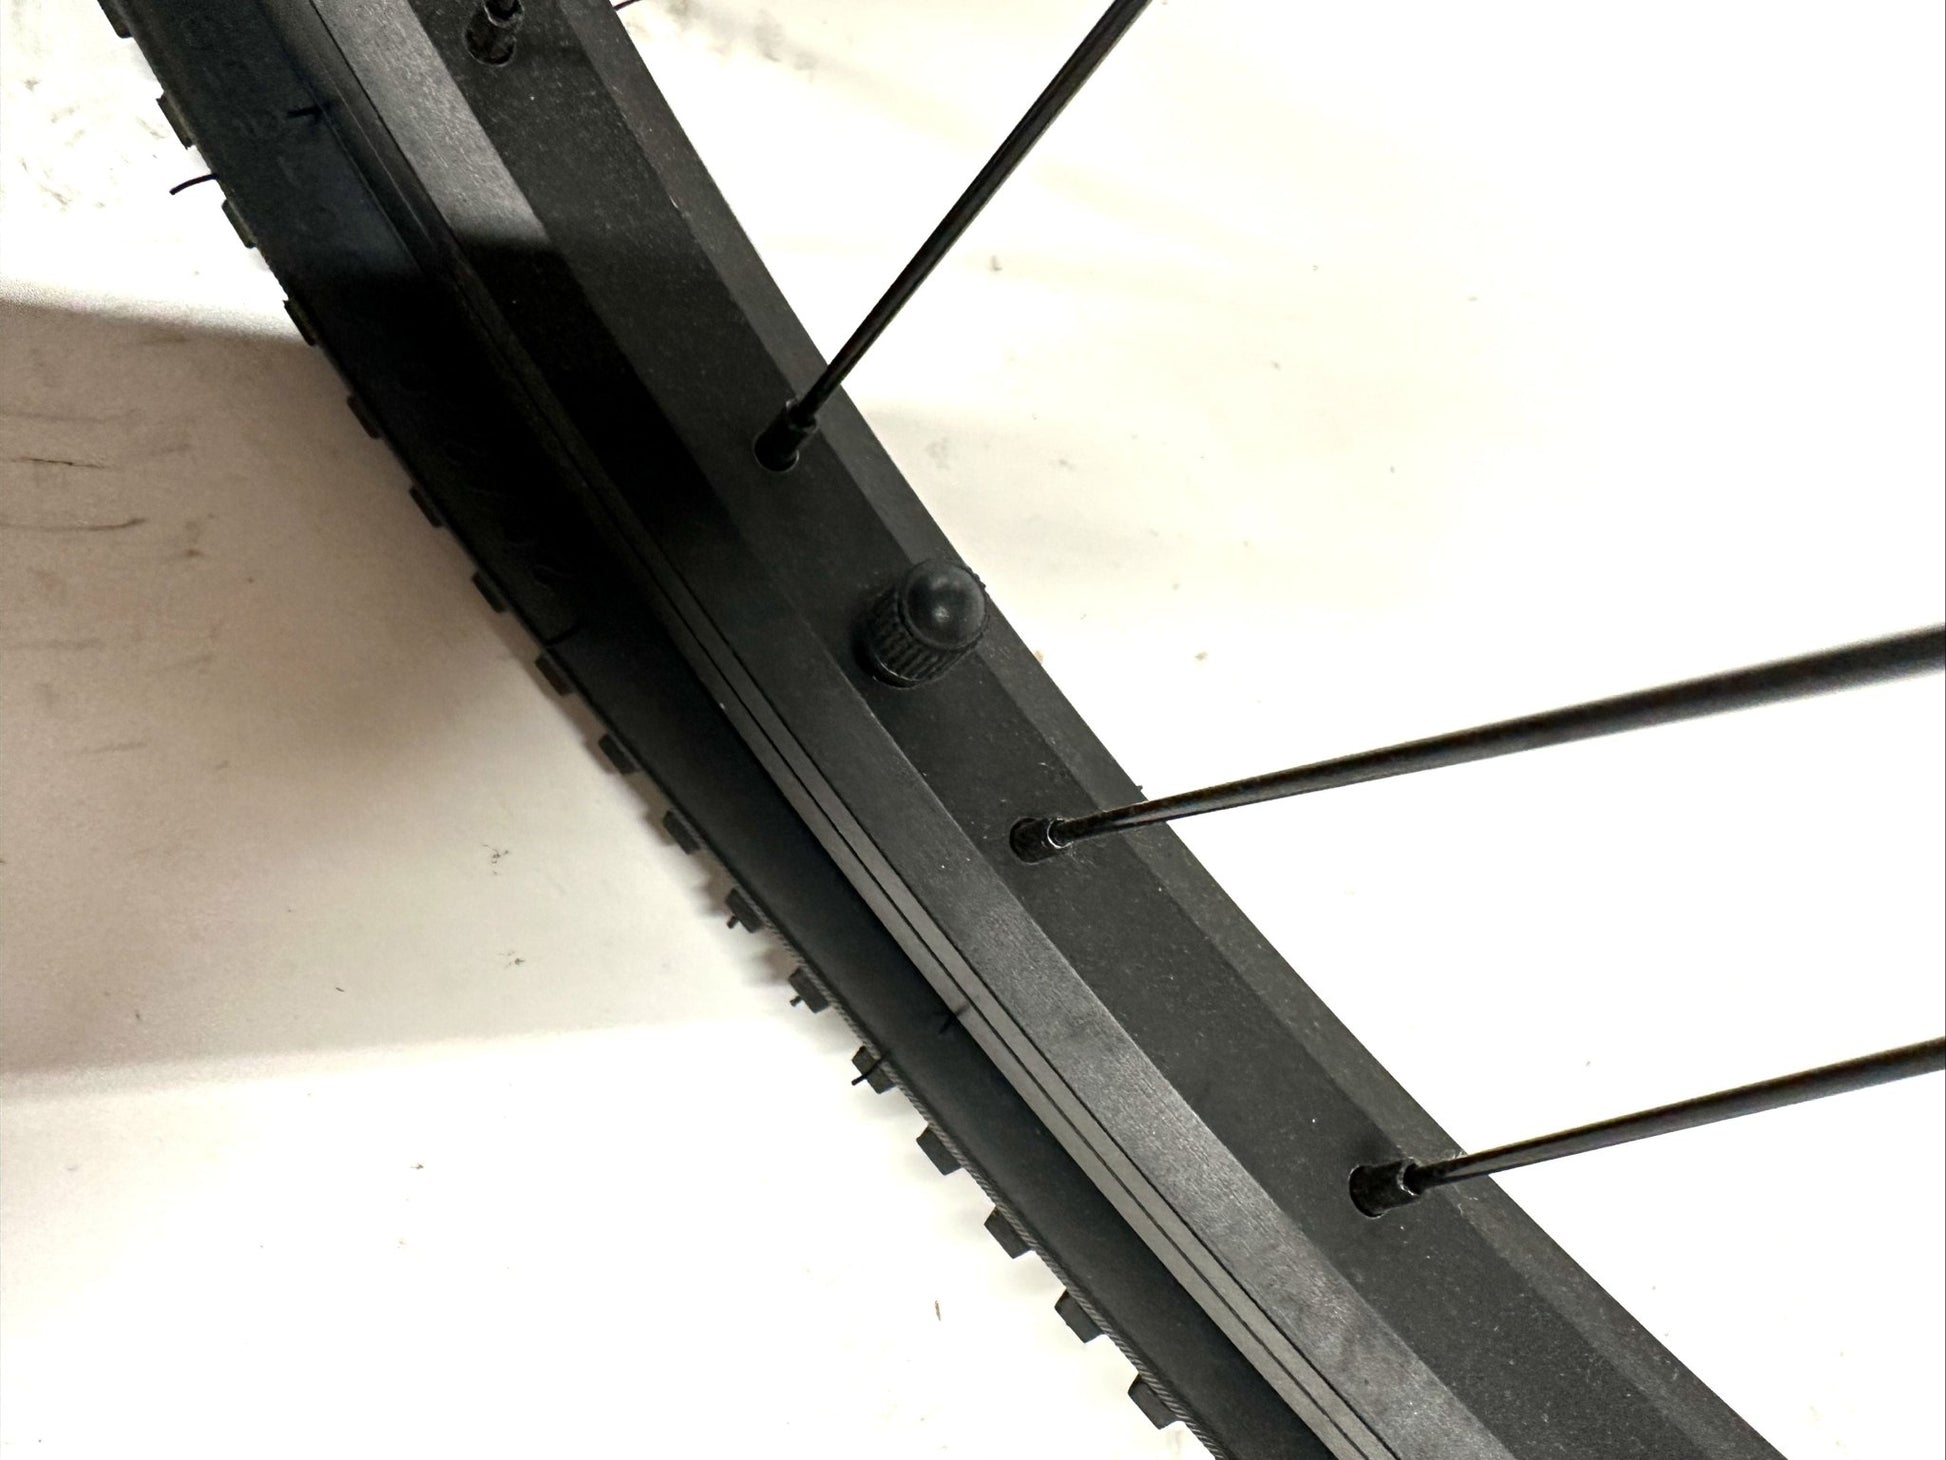 Framed 26 x 2.0 BMX Bike Alloy Sealed Bearing Rear Disc Wheel 110mm Tire 16t NEW - Random Bike Parts